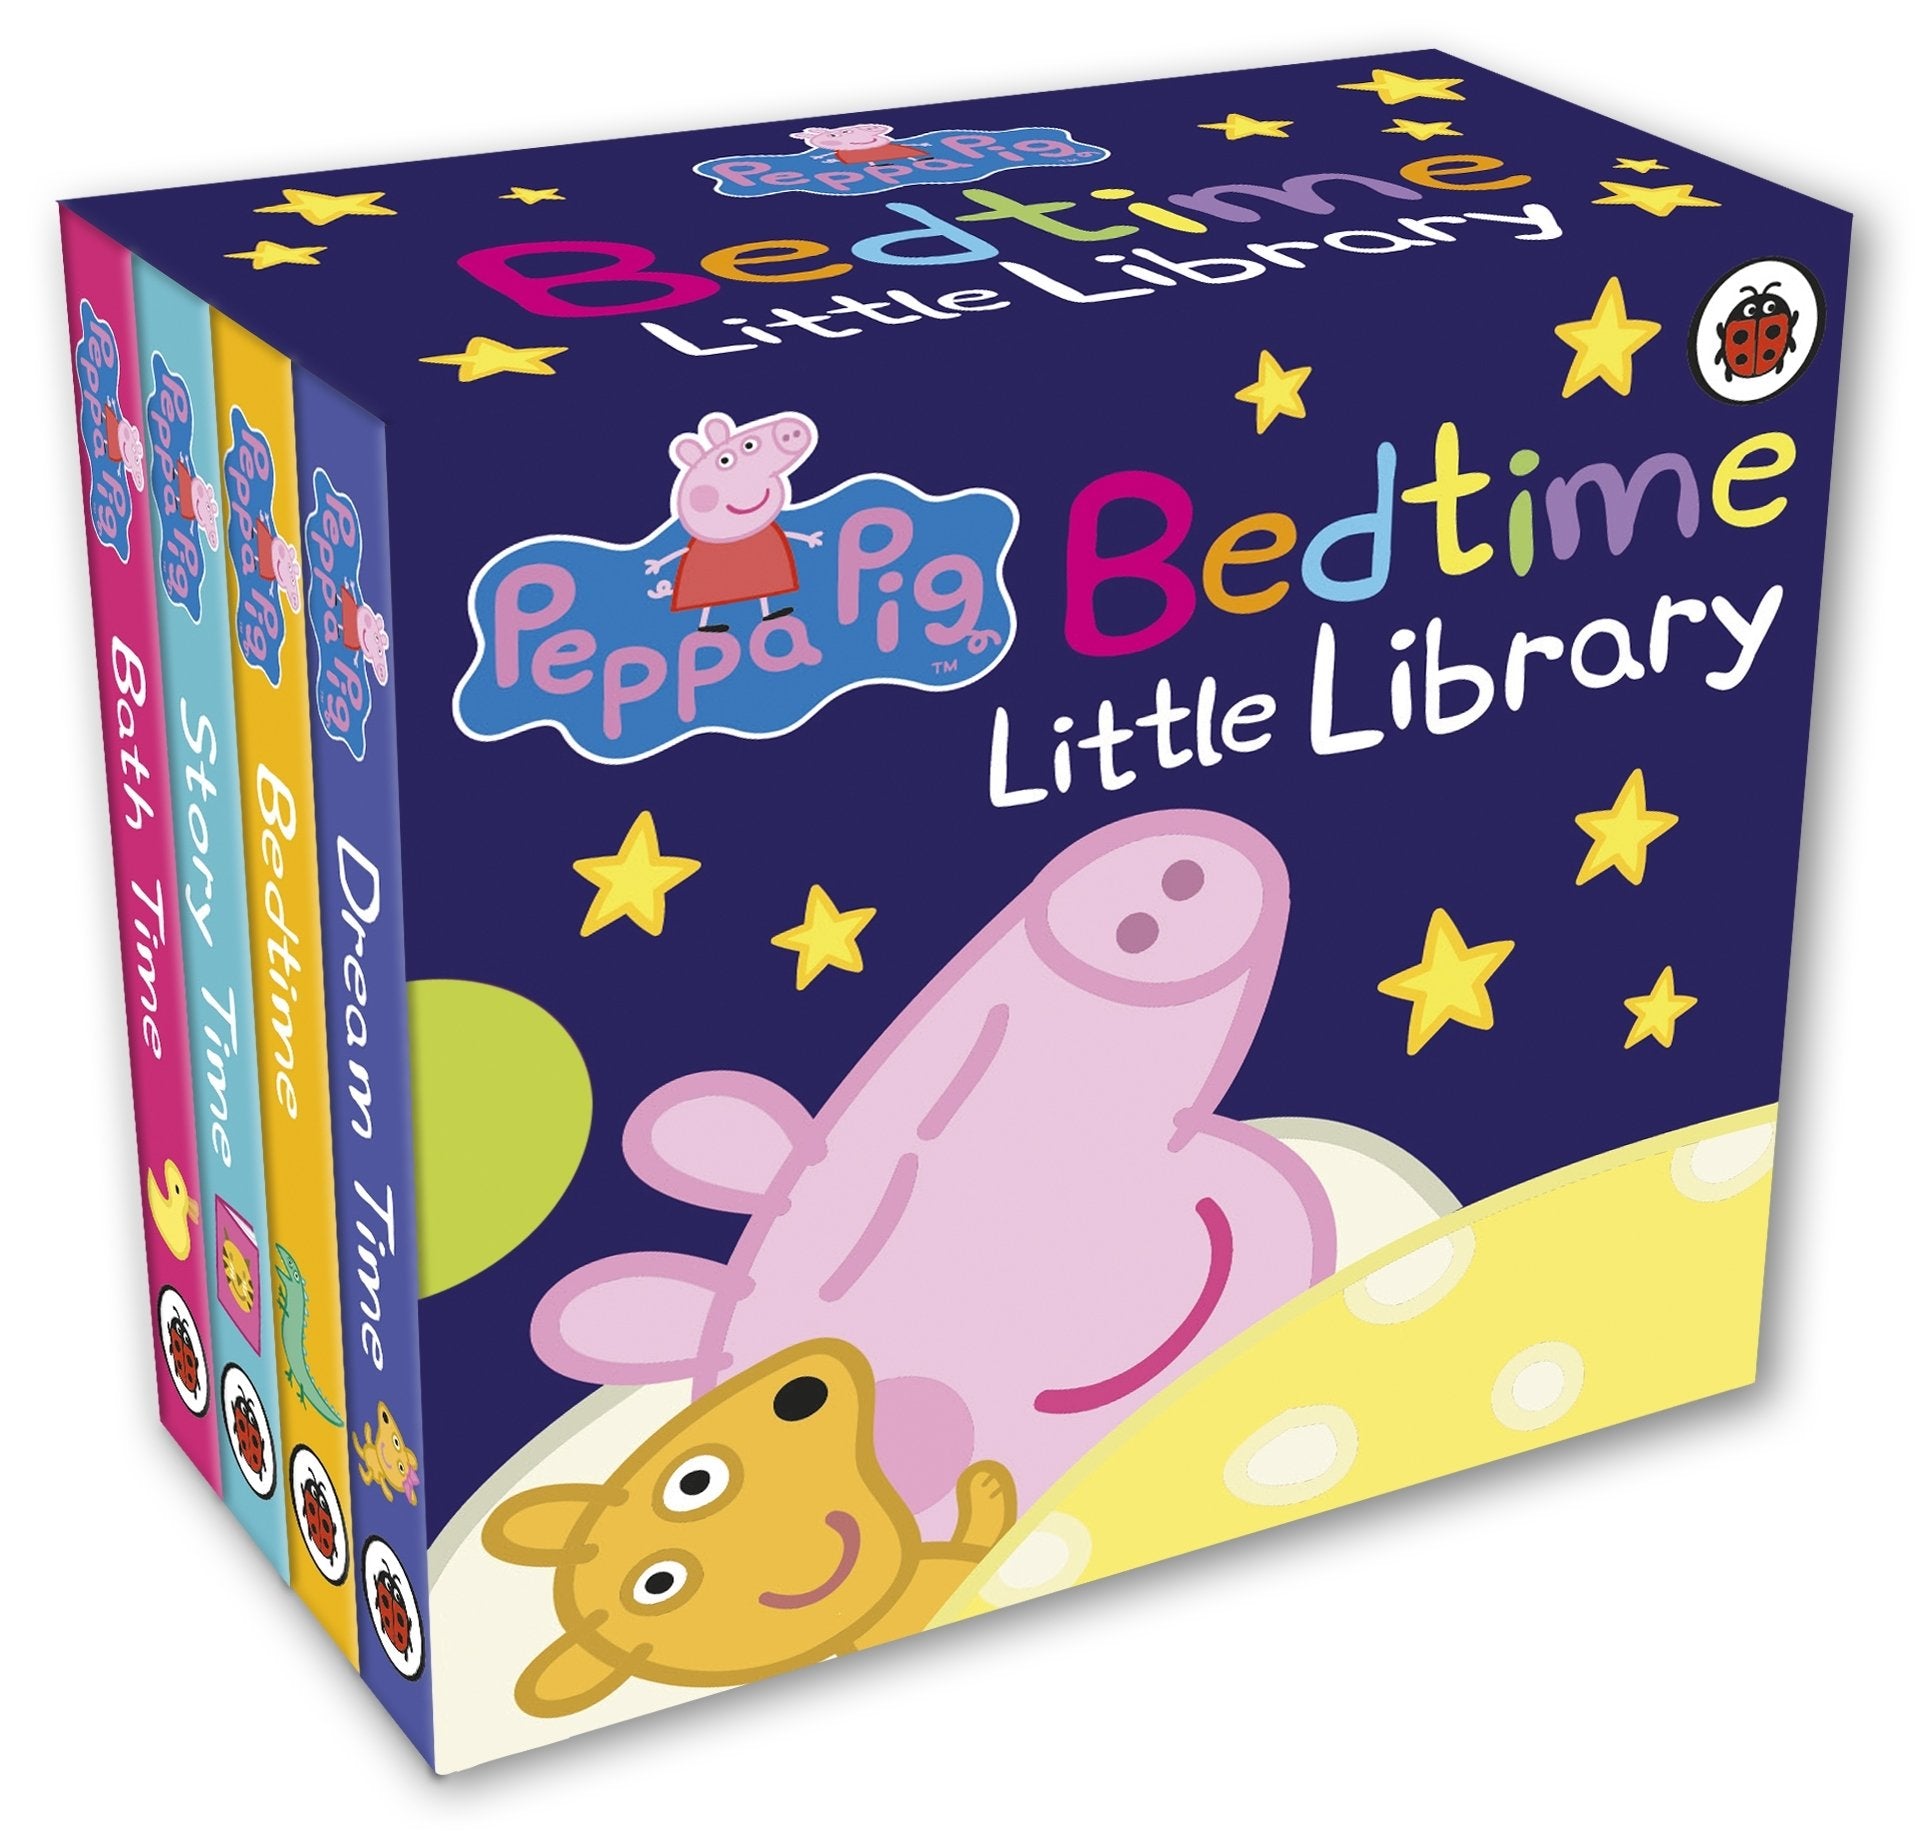 Peppa Pig Bedtime Library